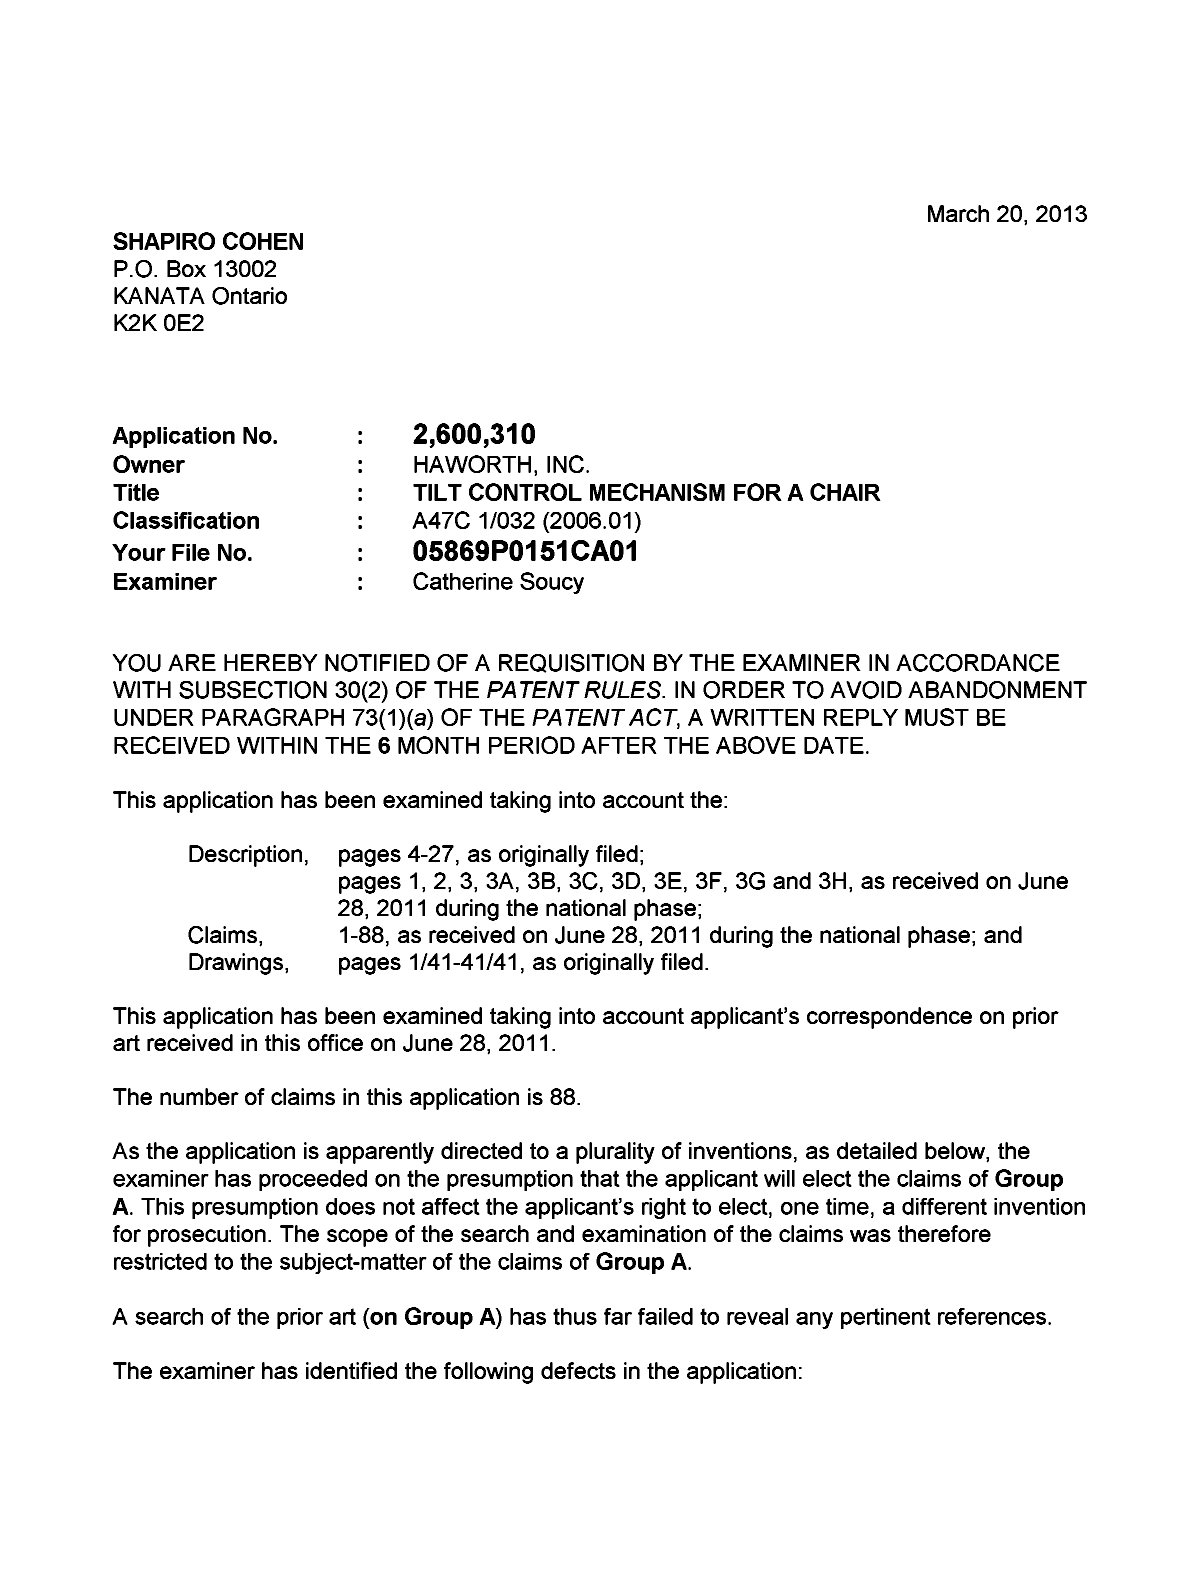 Canadian Patent Document 2600310. Prosecution-Amendment 20130320. Image 1 of 2